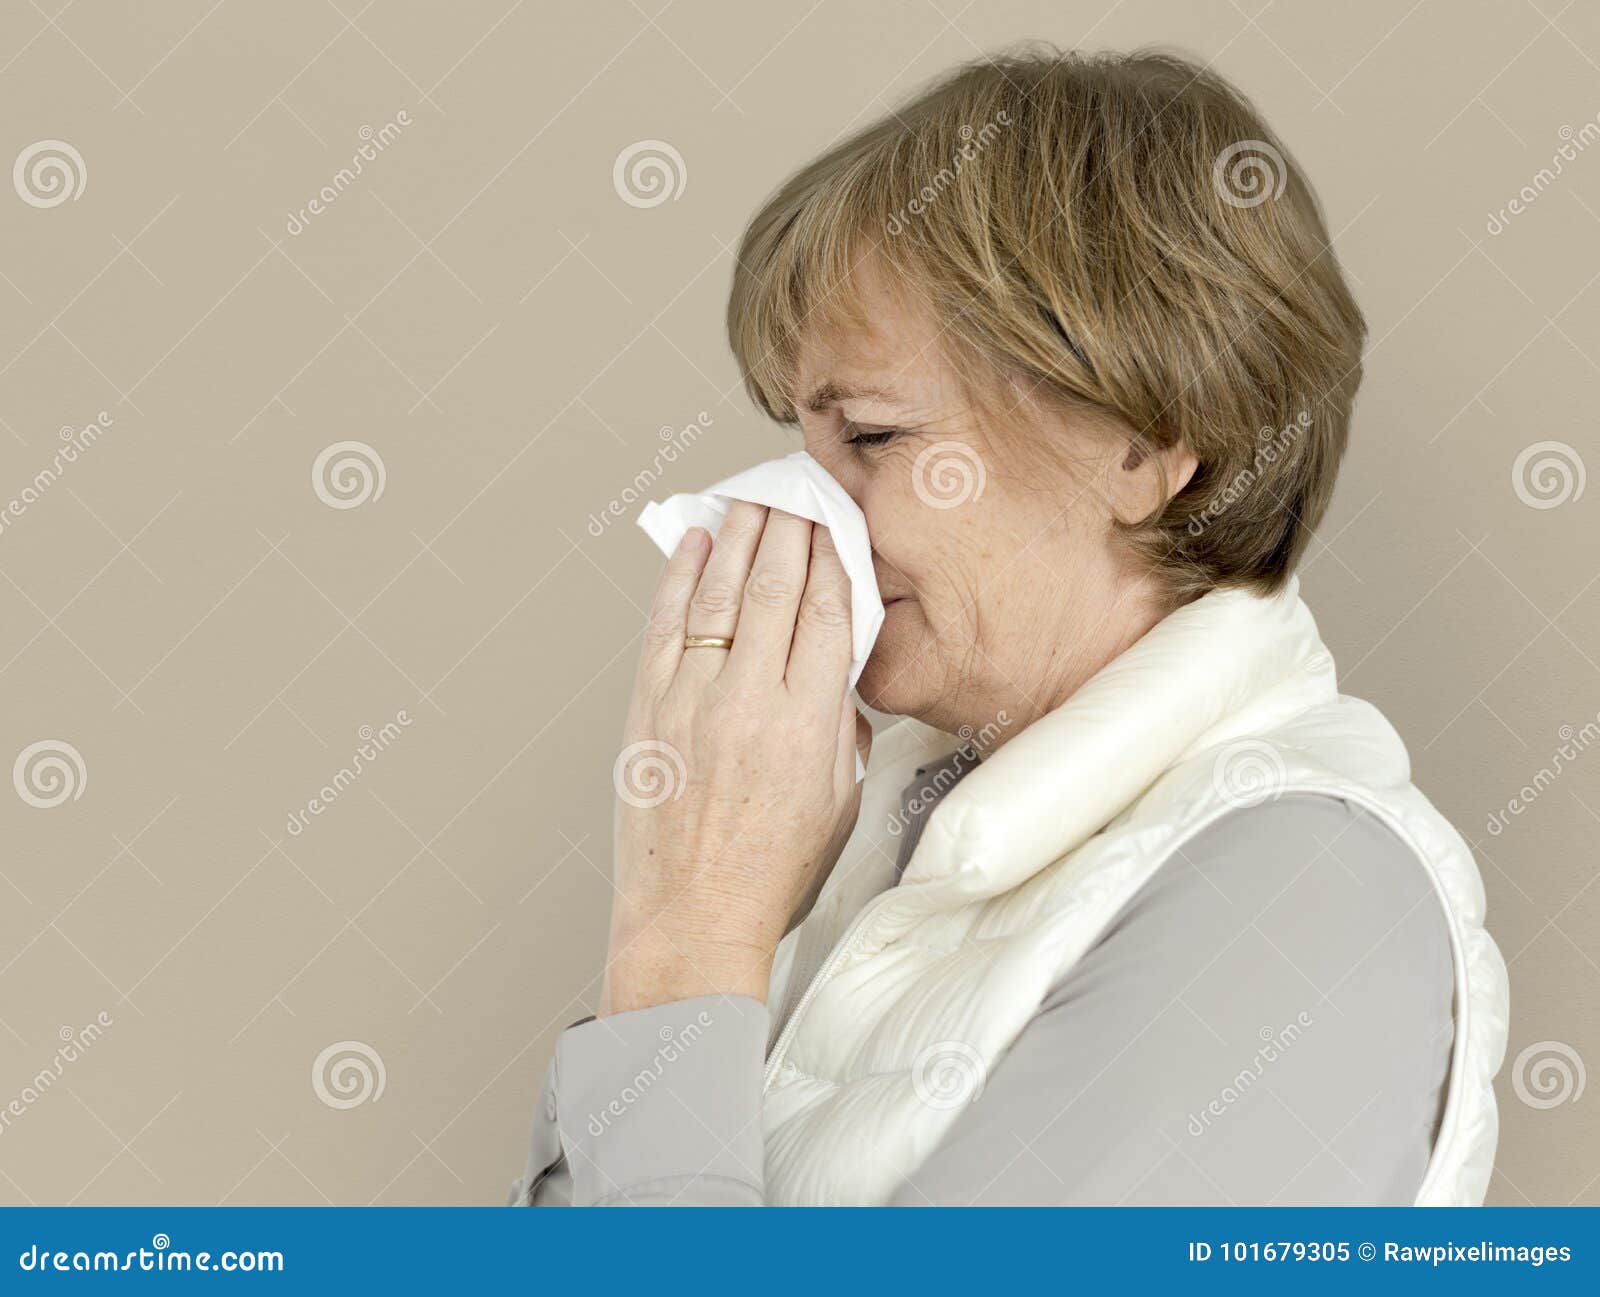 woman sad crying depress sneeze studio portrait